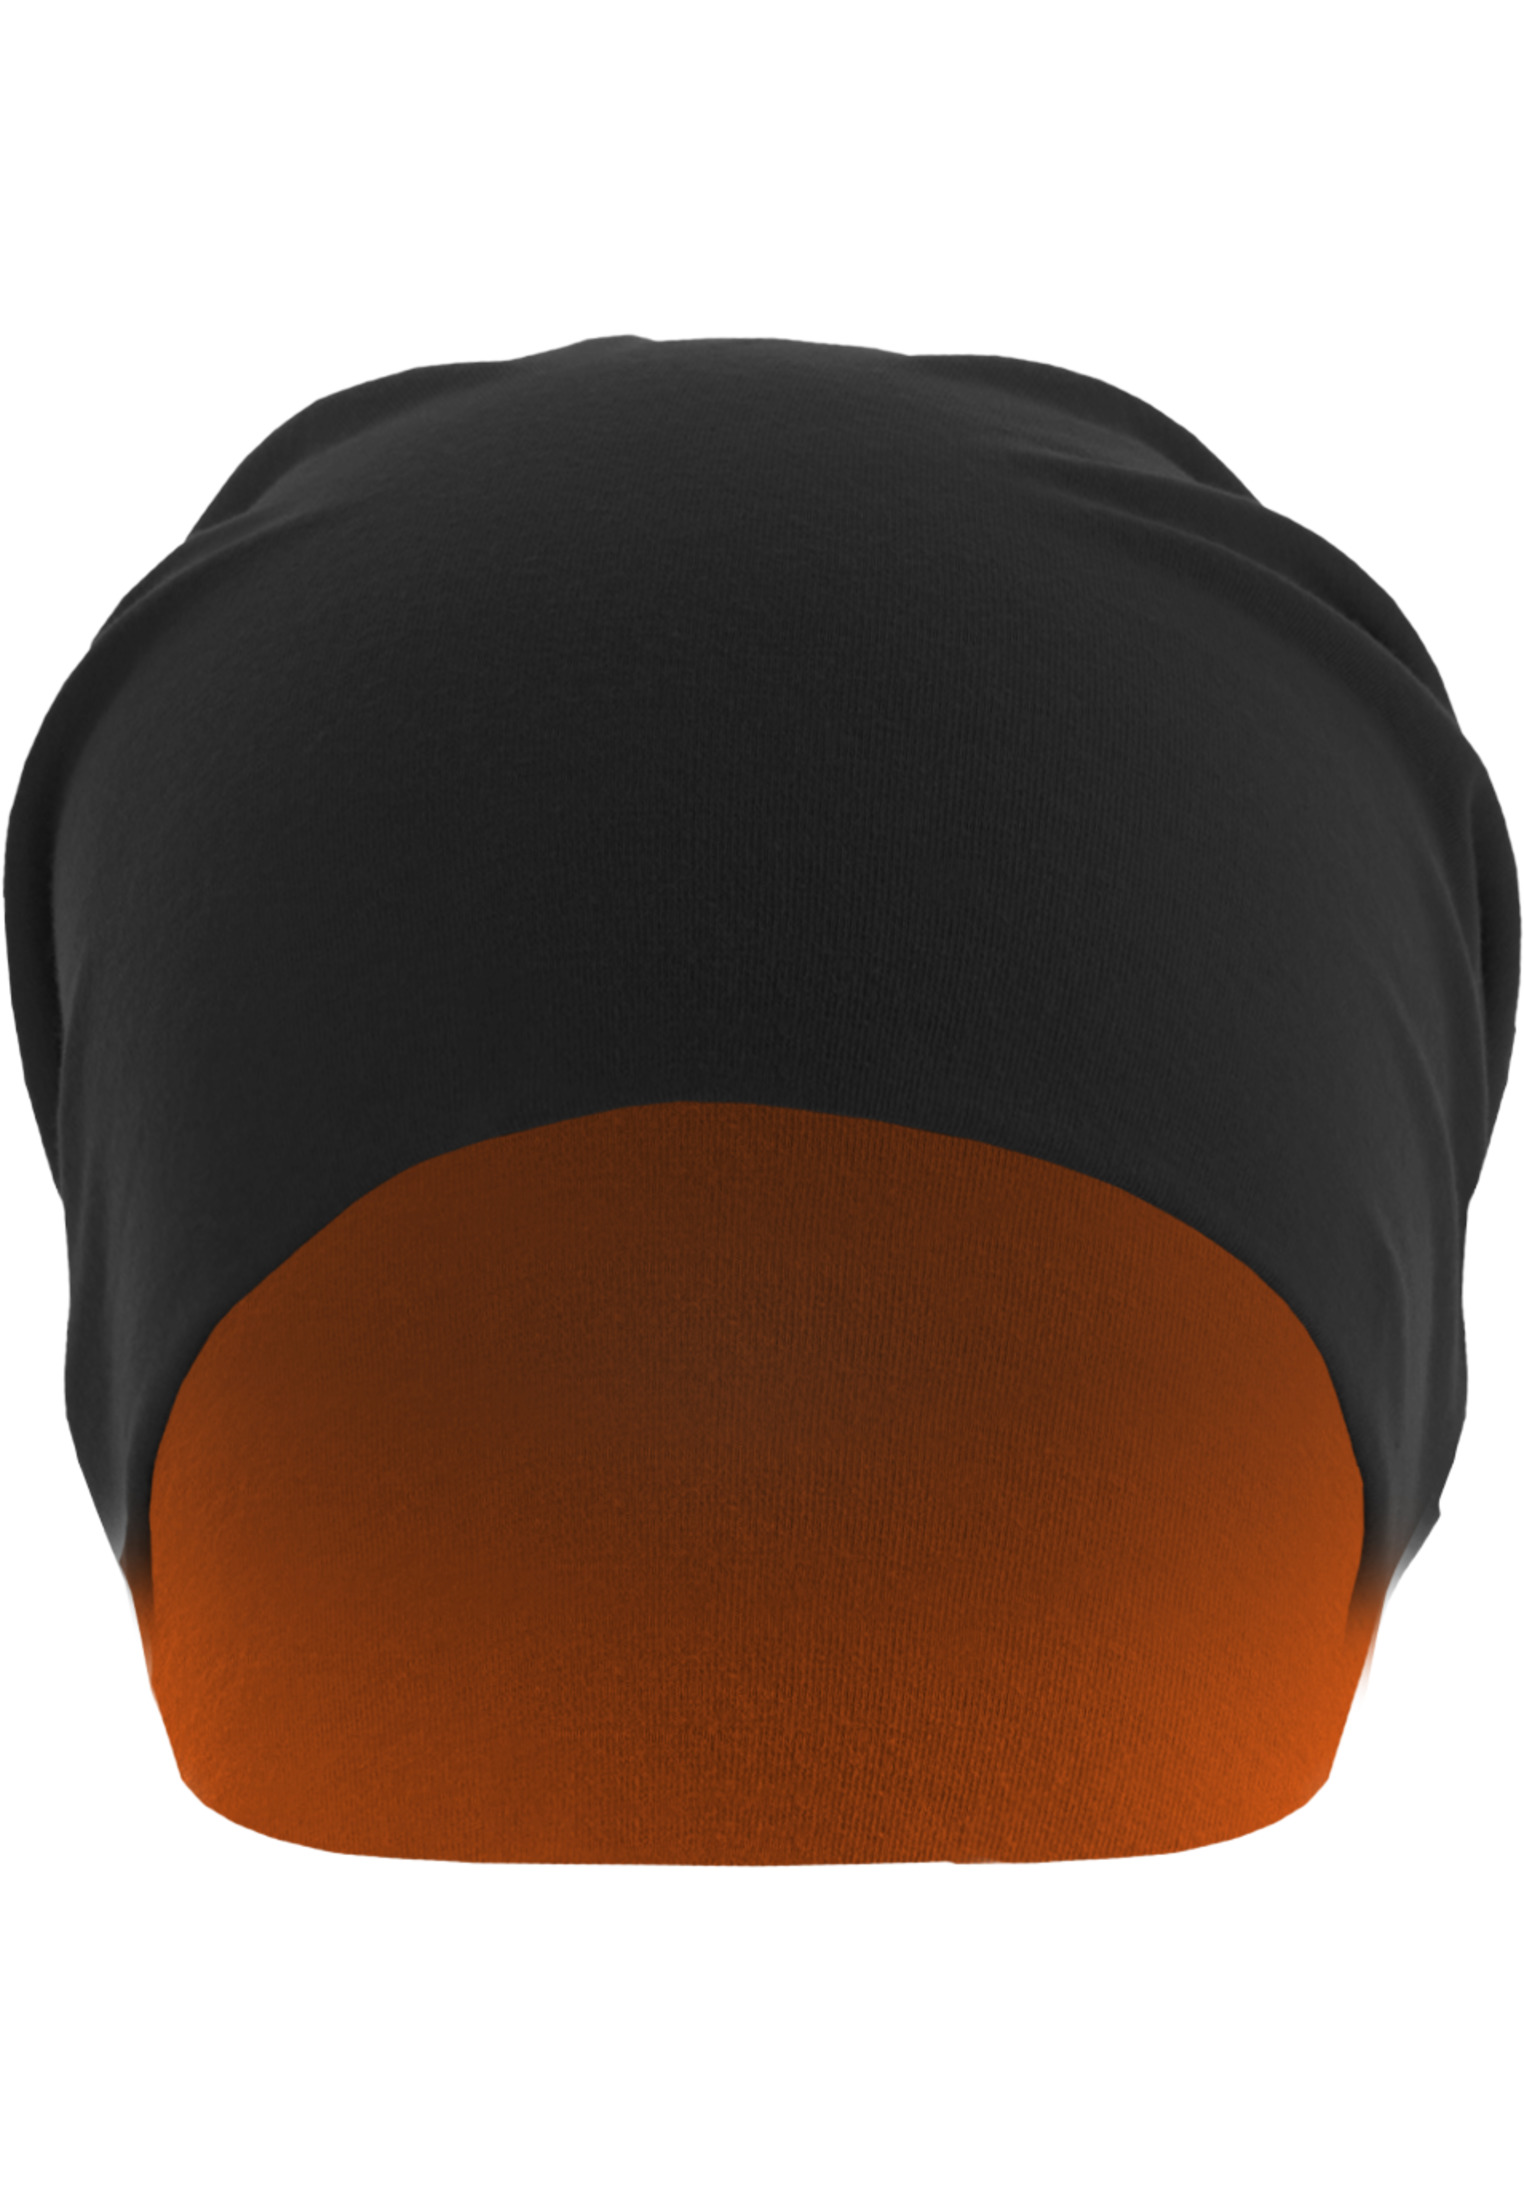 Jersey cap double-sided blk/neonorange